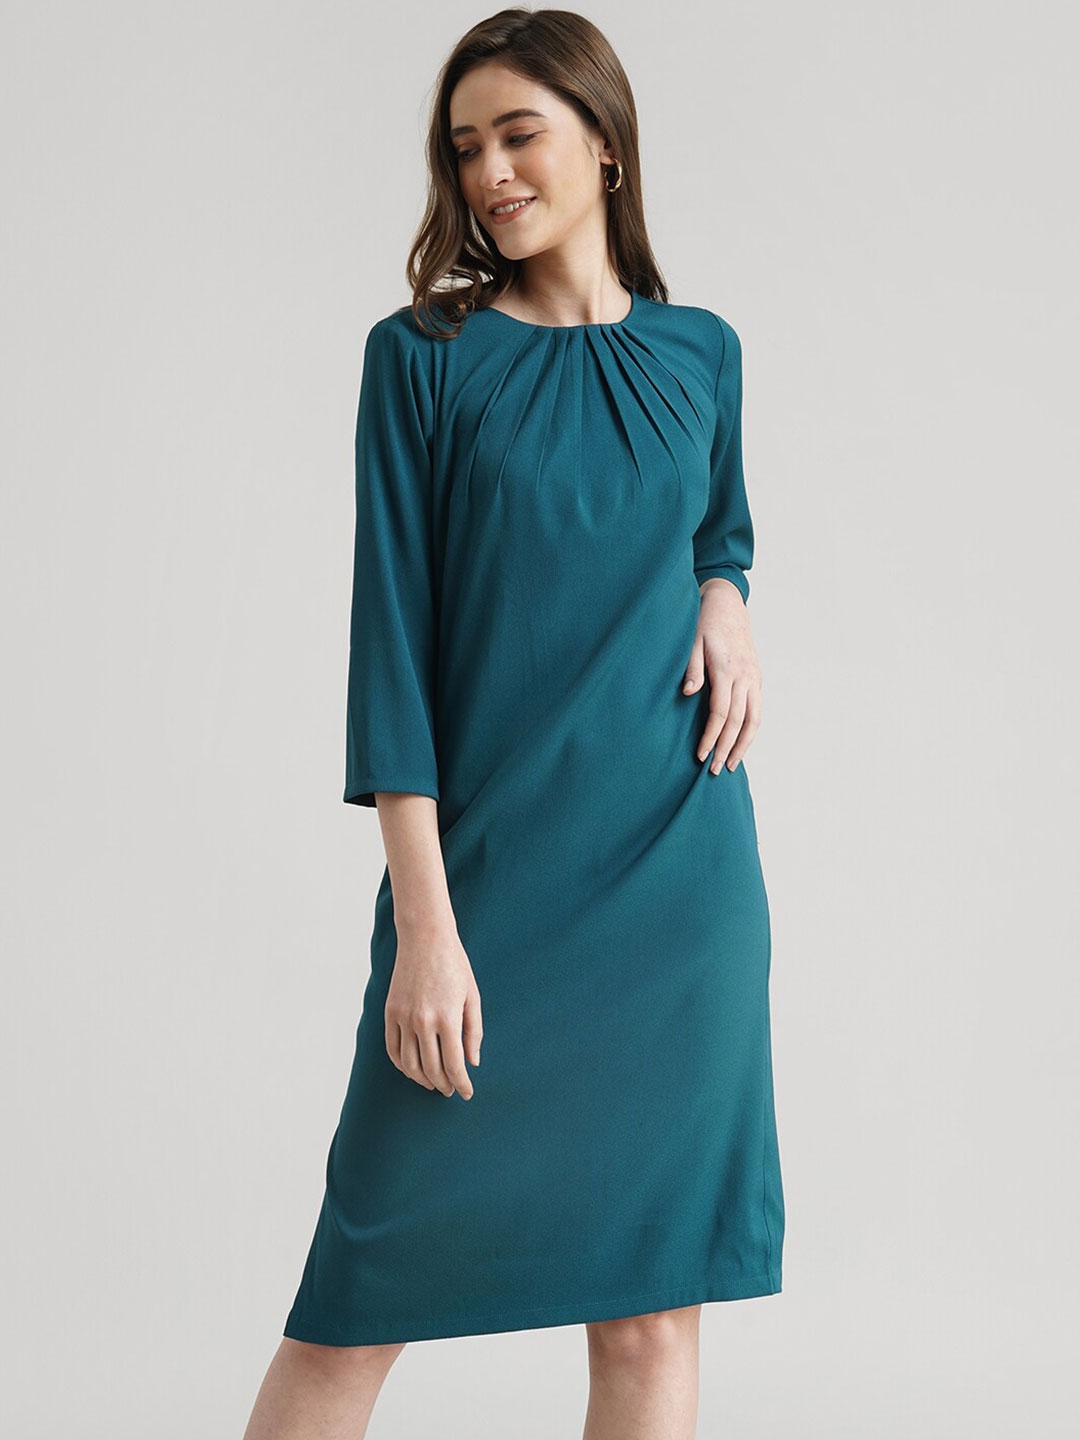 Buy FableStreet Teal Formal A Line Dress - Dresses for Women 16935912 ...